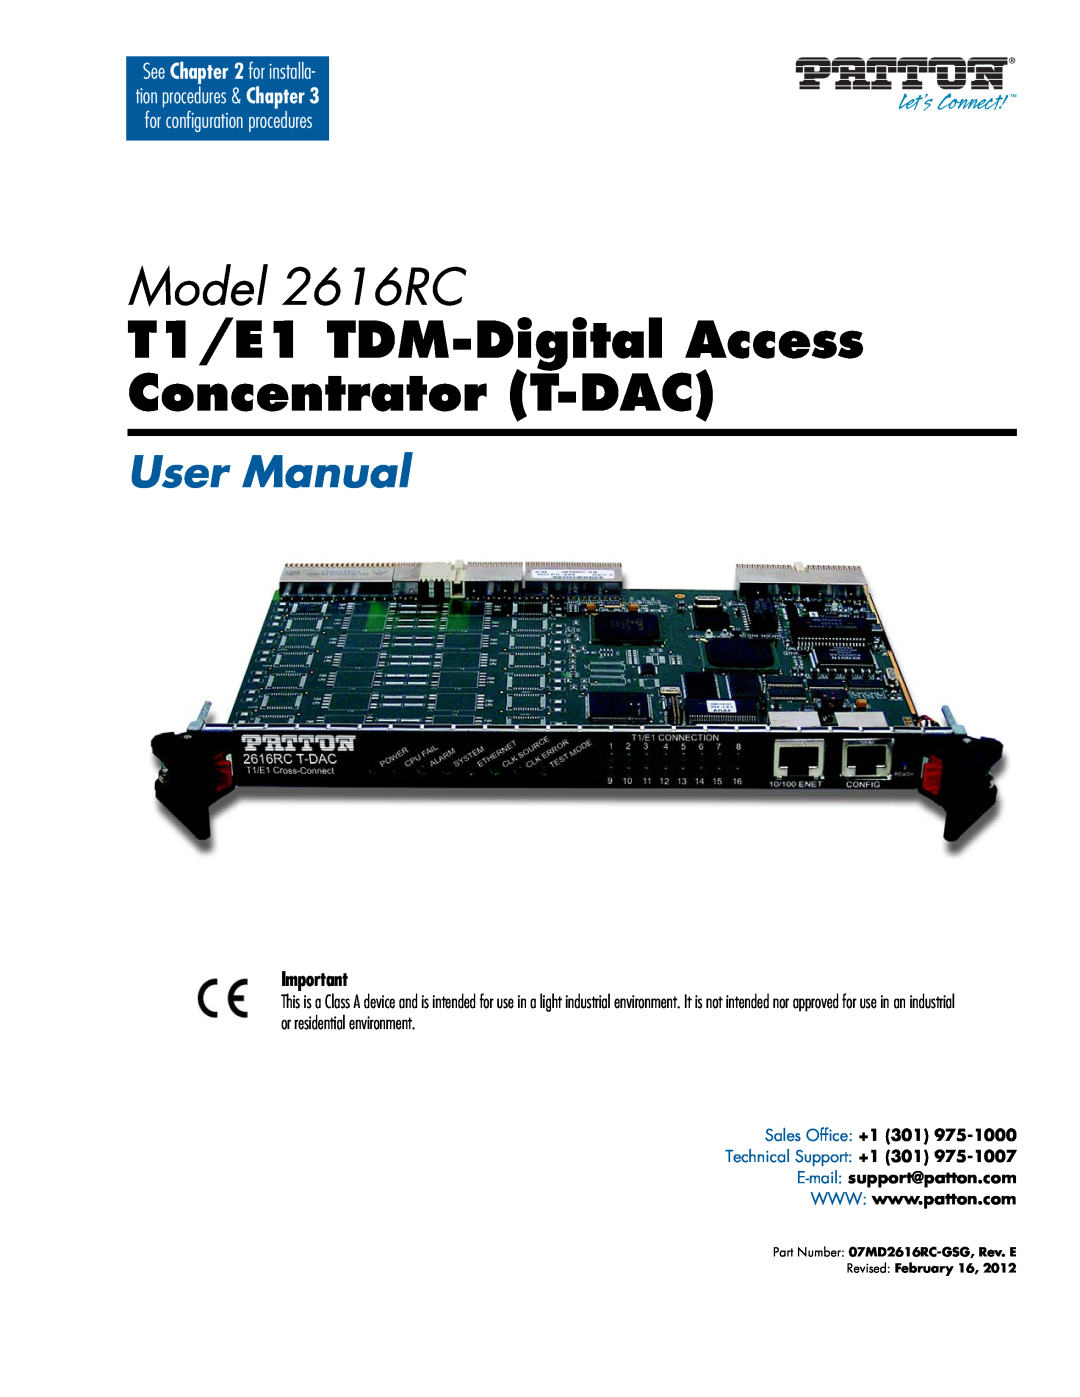 Patton electronic manual Model 2616RC T-DAC, Port T1/E1 T-DAC Digital Cross Connect, ForeFront AIS, Port Fallback 